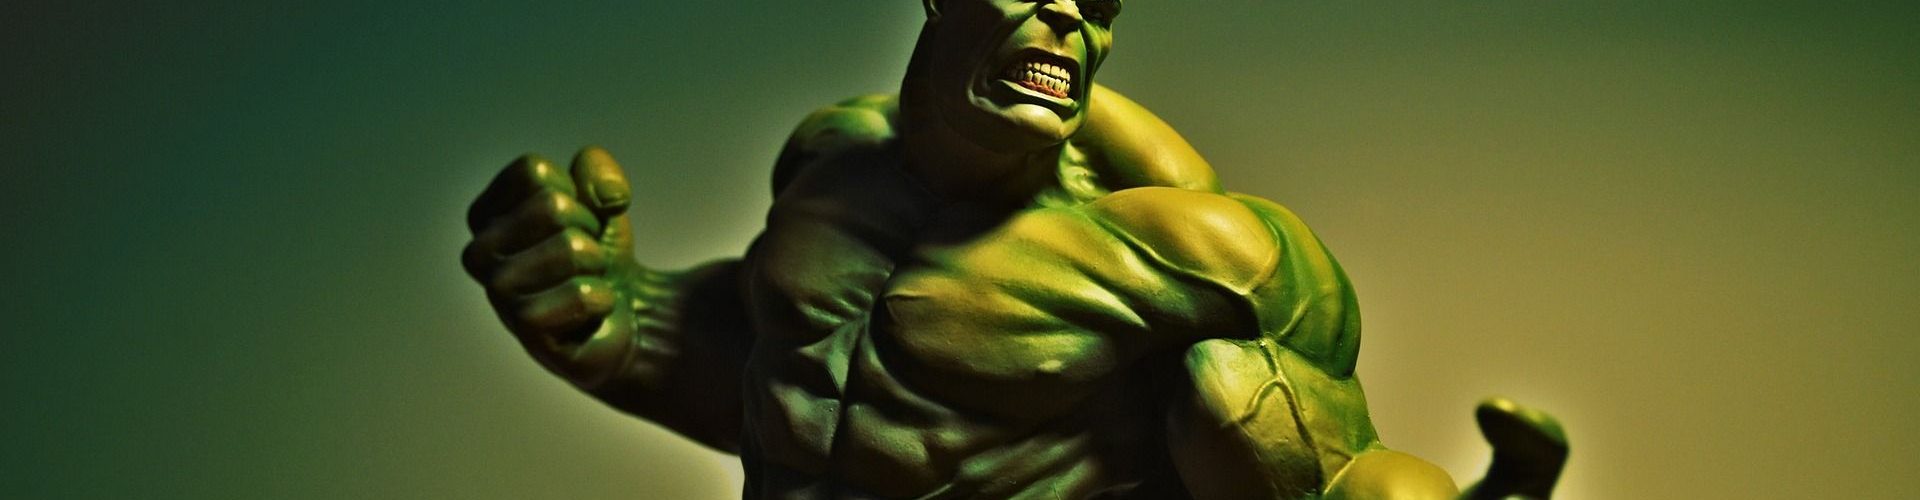 Brutish Hulk